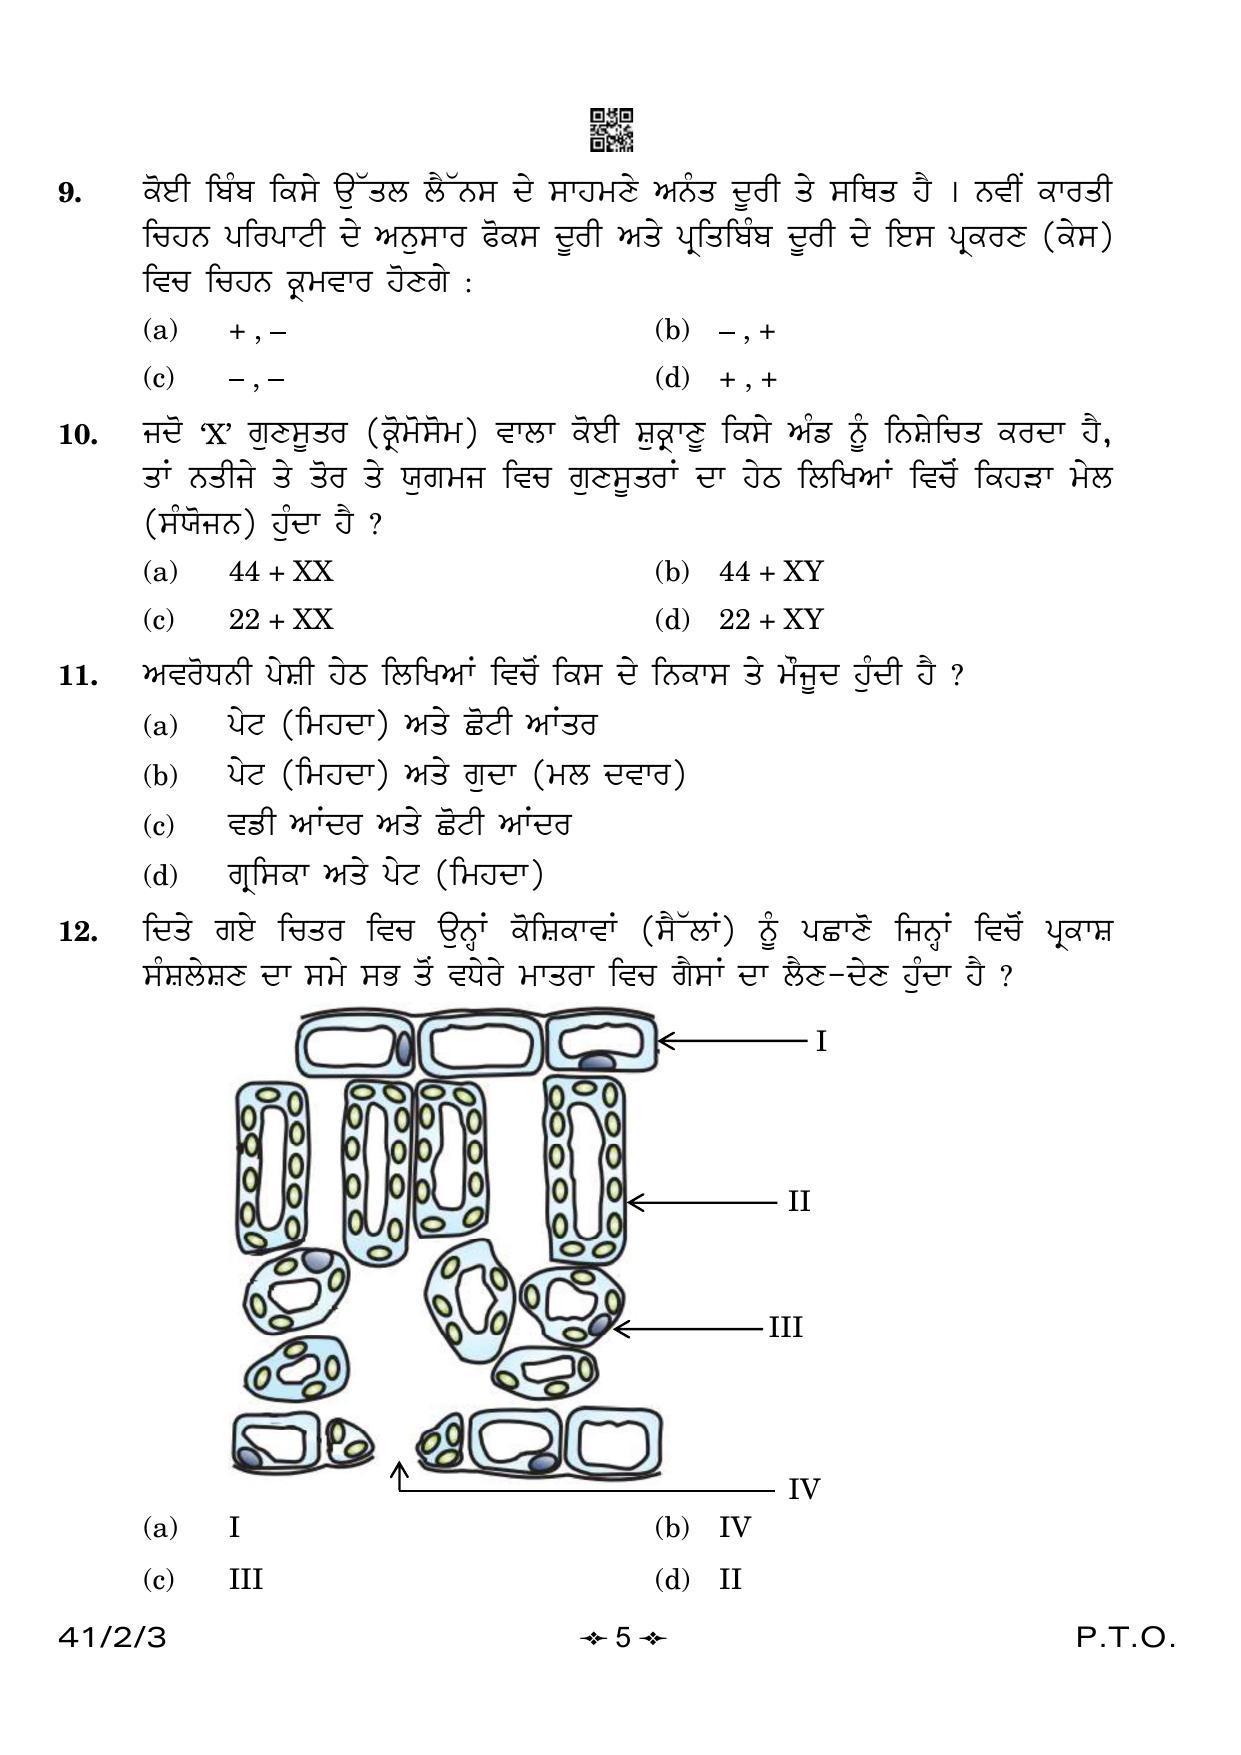 CBSE Class 10 41-2-3 Science Punjabi Version 2023 Question Paper - Page 5